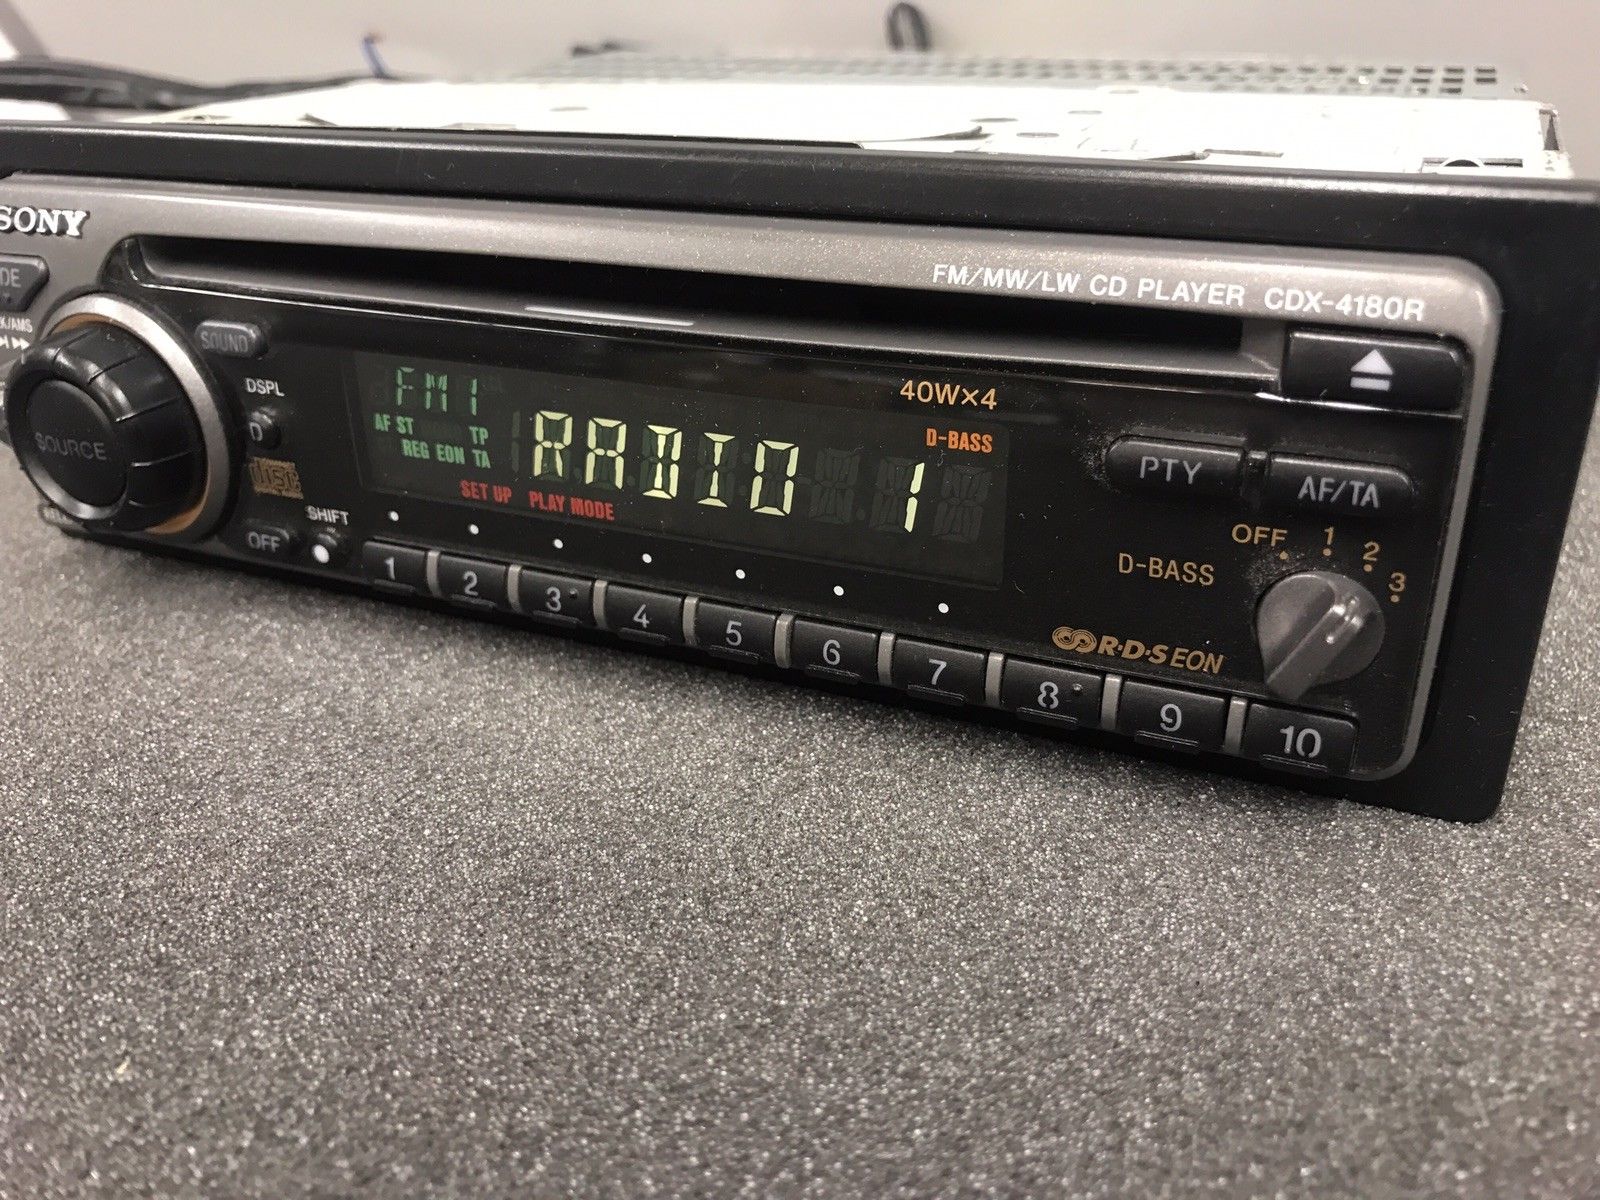 Old Sony Car Radio Stereo Cd Player Model Cdx-4180r Retro 90s Vintage Retro